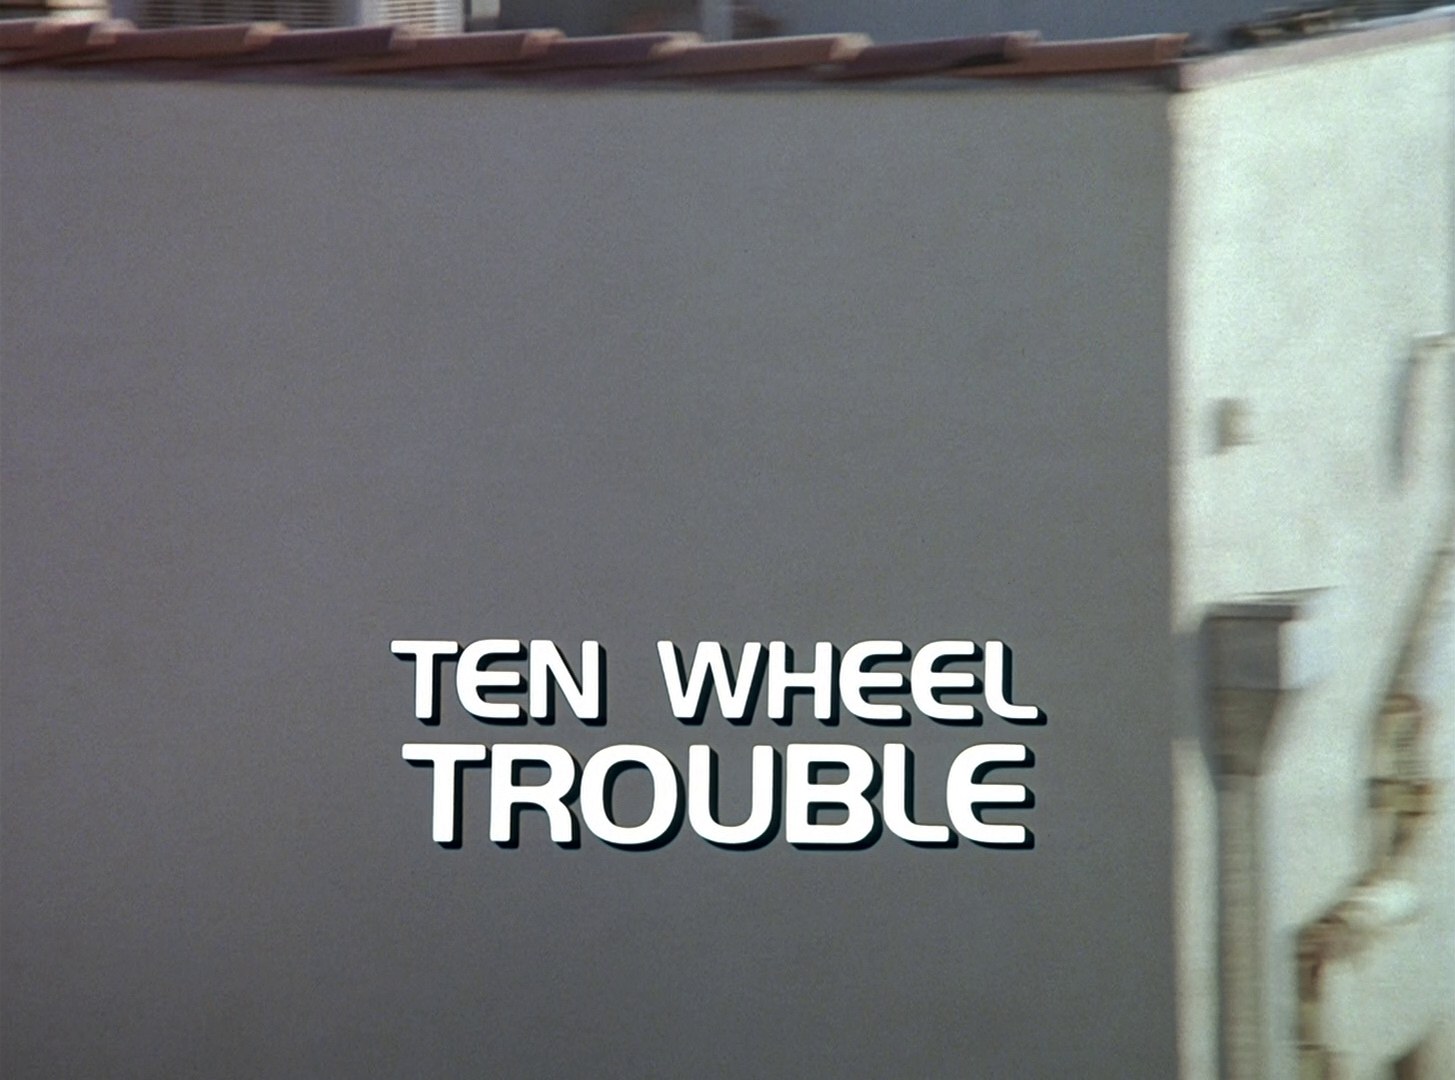 Knight Rider Season 3 - Episode 60 - Ten Wheel Trouble - Photo 1